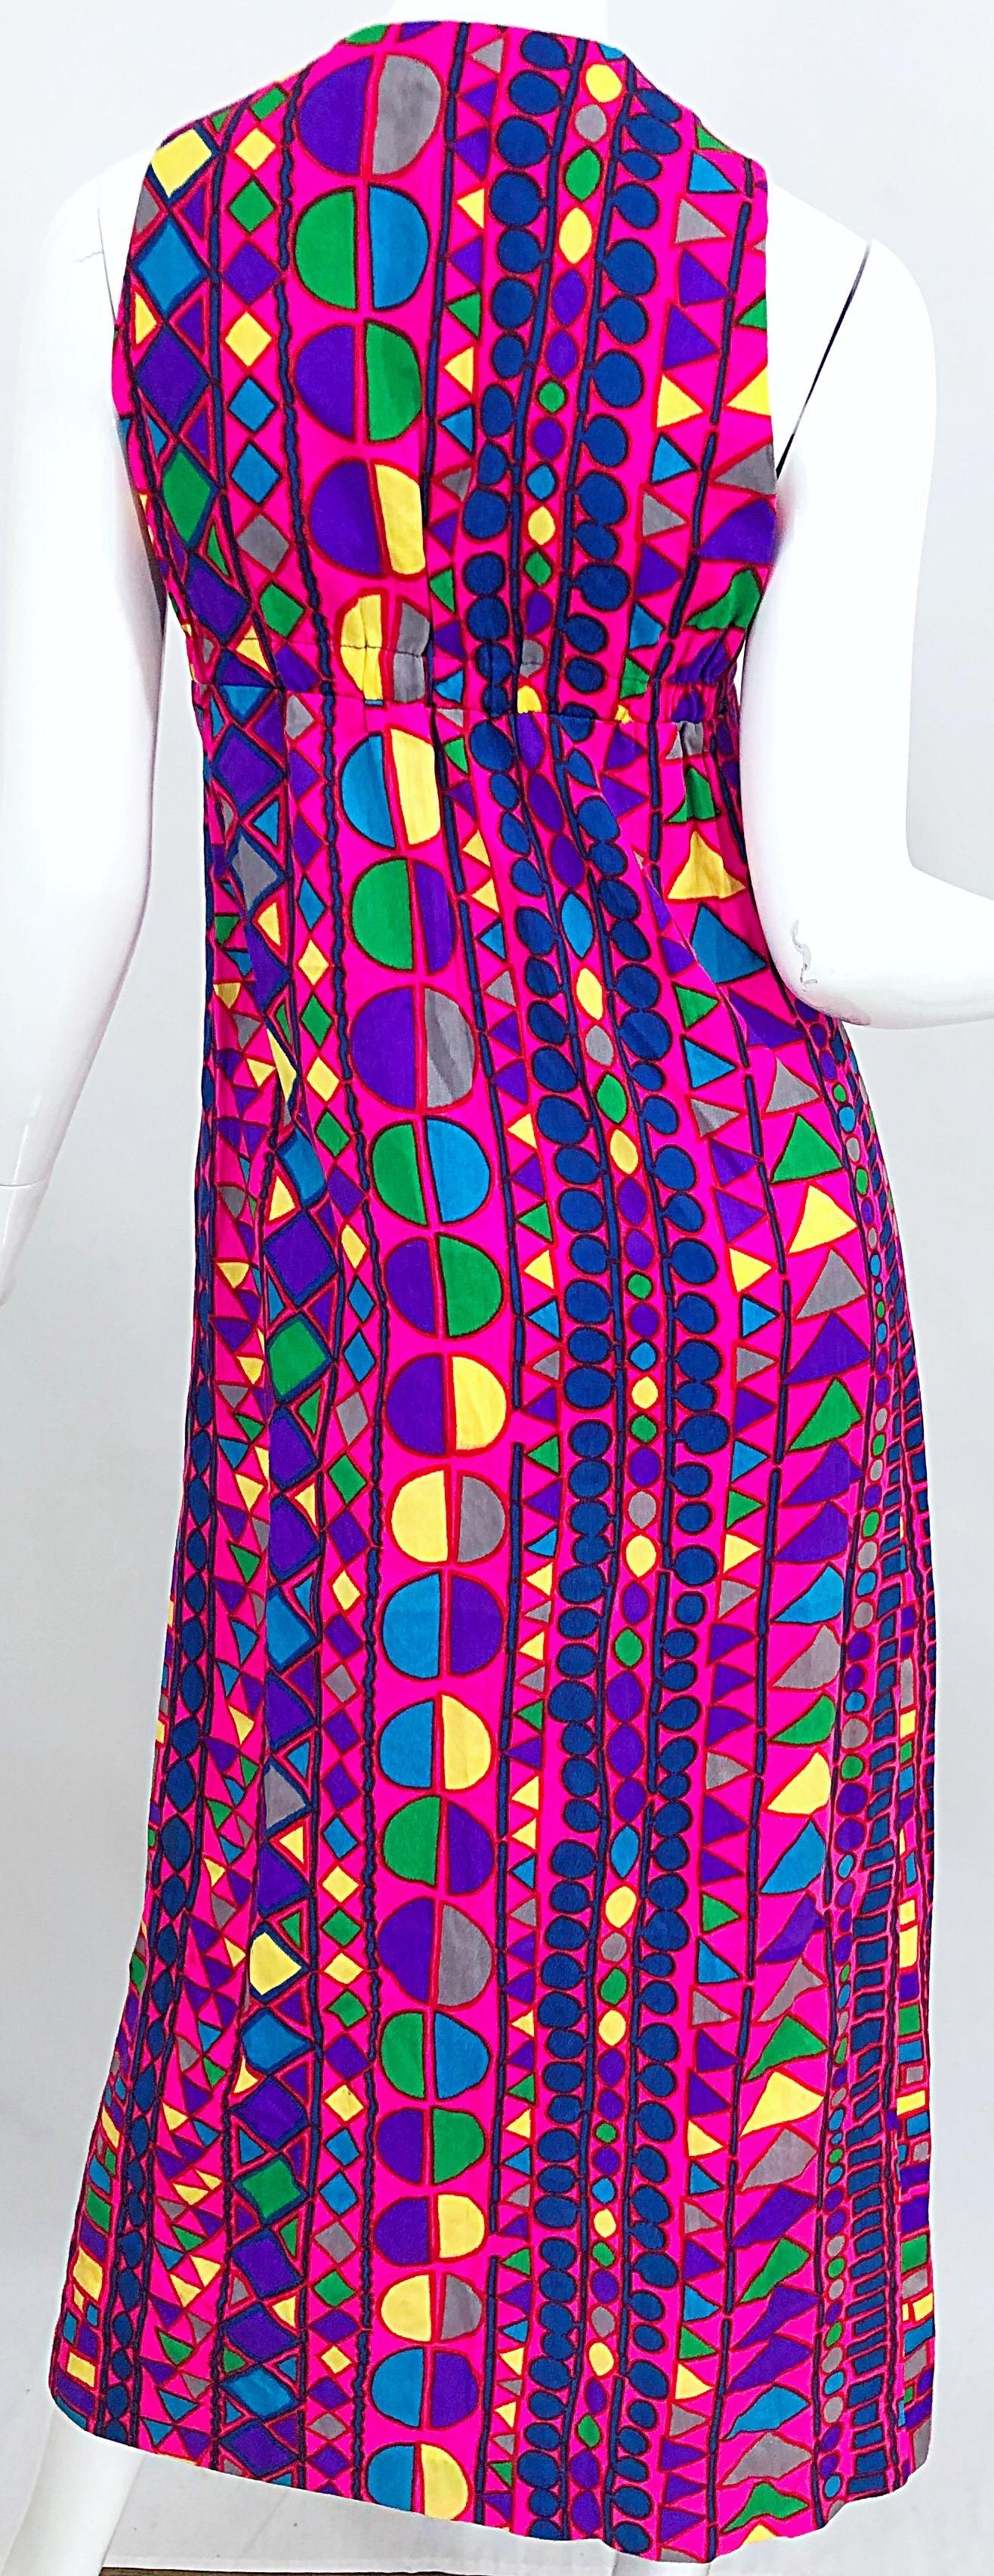 Amazing 1970s Joseph Magnin Vibrant Colorful Abstract Mosaic Vest 70s Maxi Dress For Sale 6